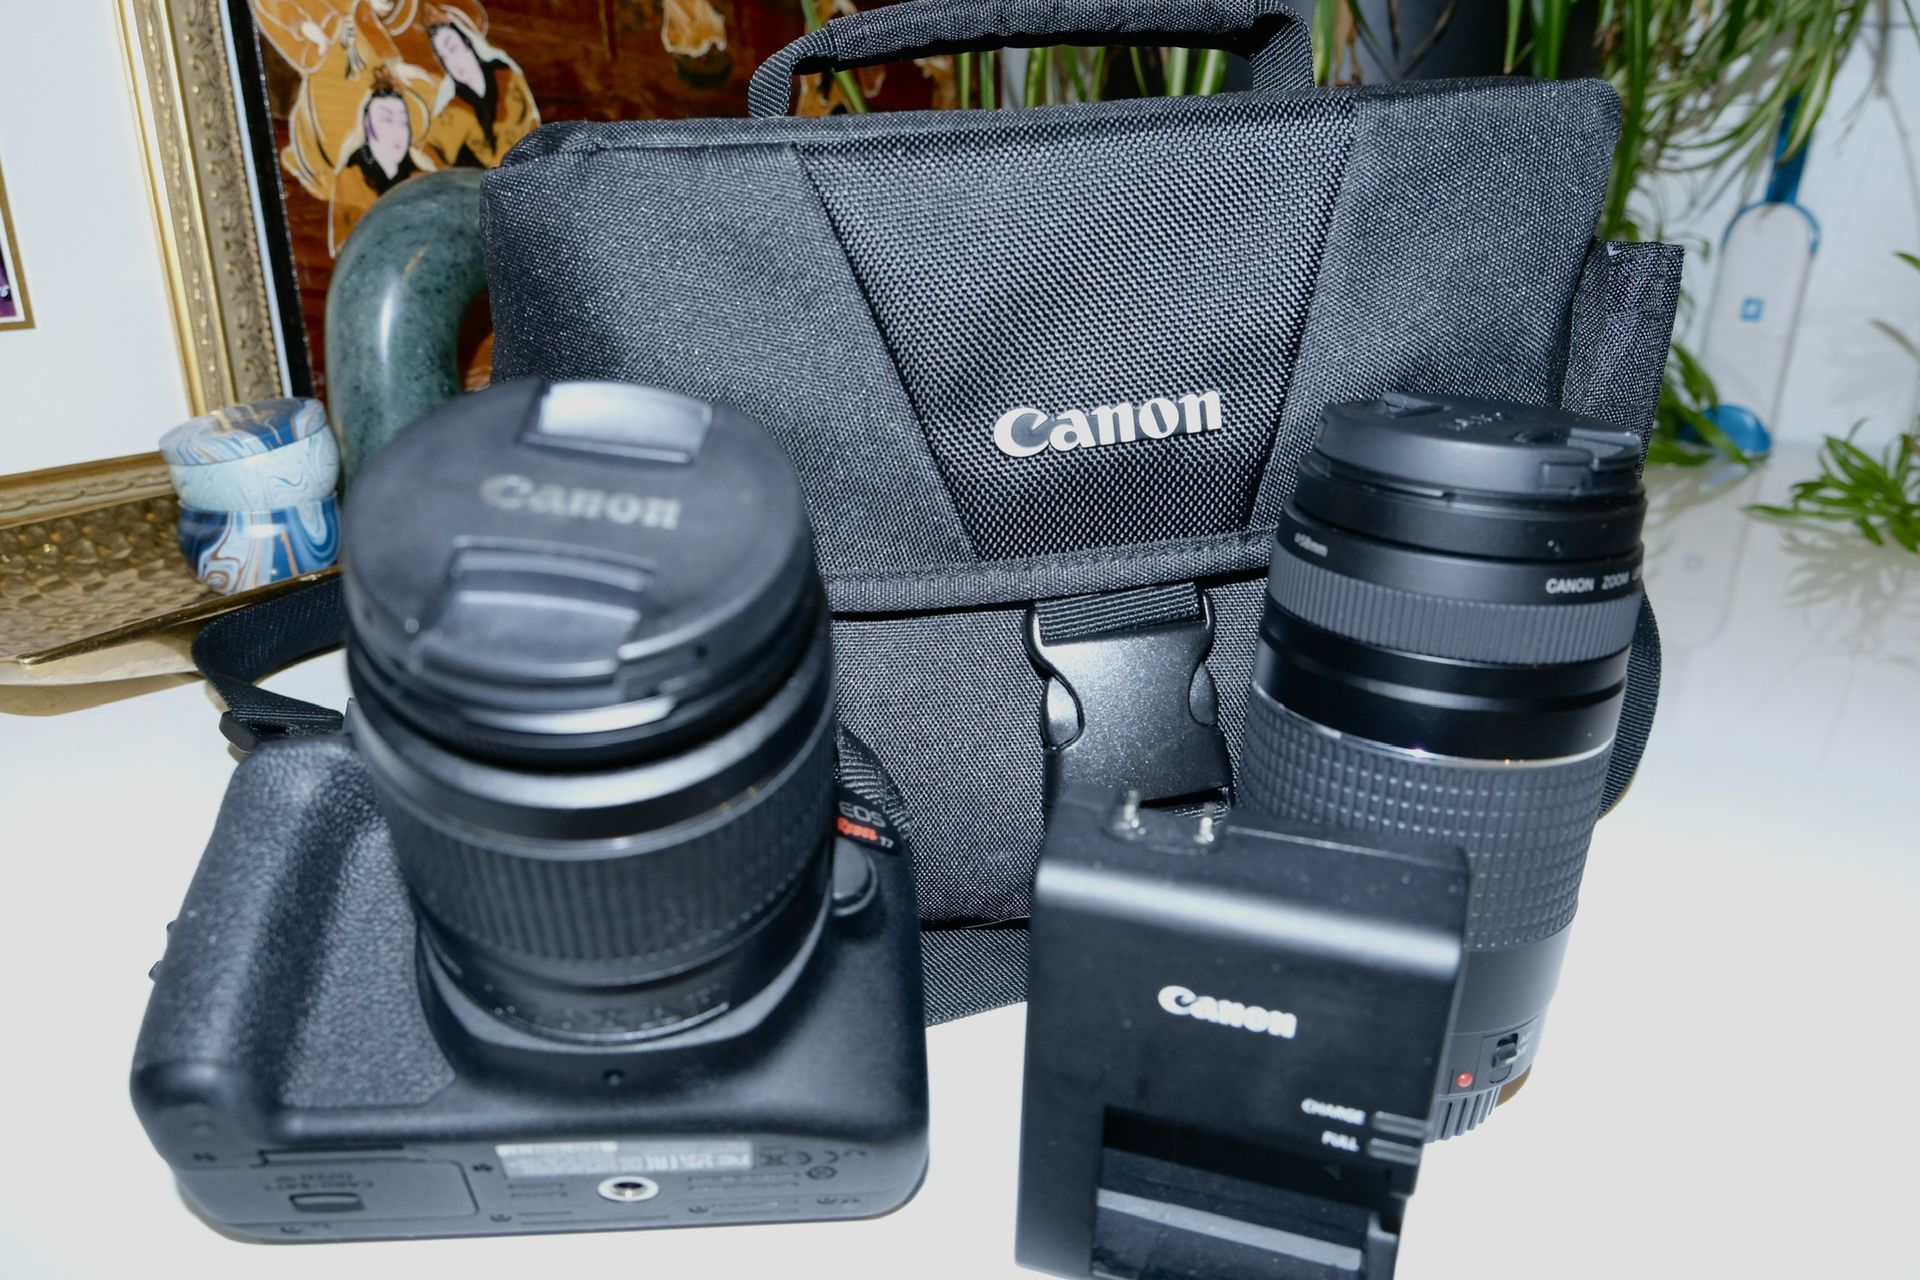 Canon EOS Rebel T7 DSLR Camera with 18-55mm Len,75-300mm Lens.